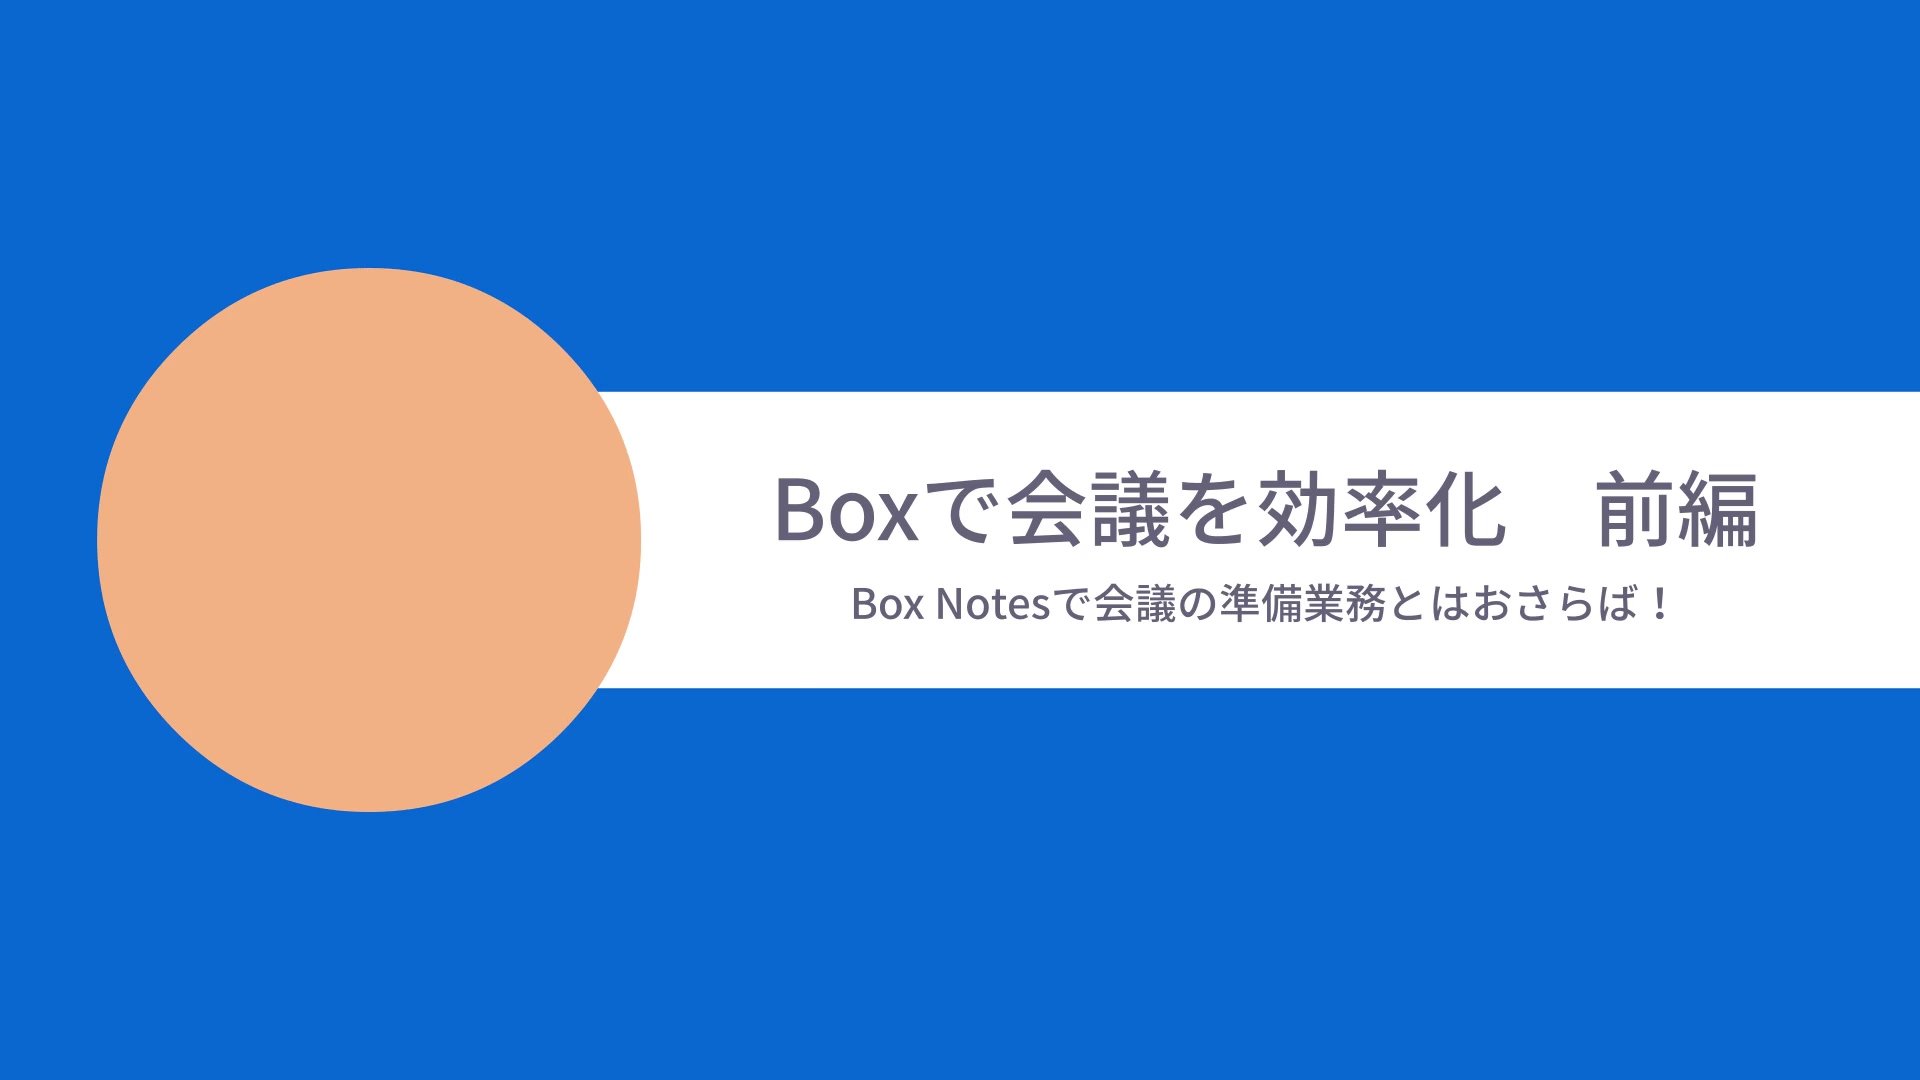 [Boxユースケースムービー] Box Notesで会議を効率化（前編）